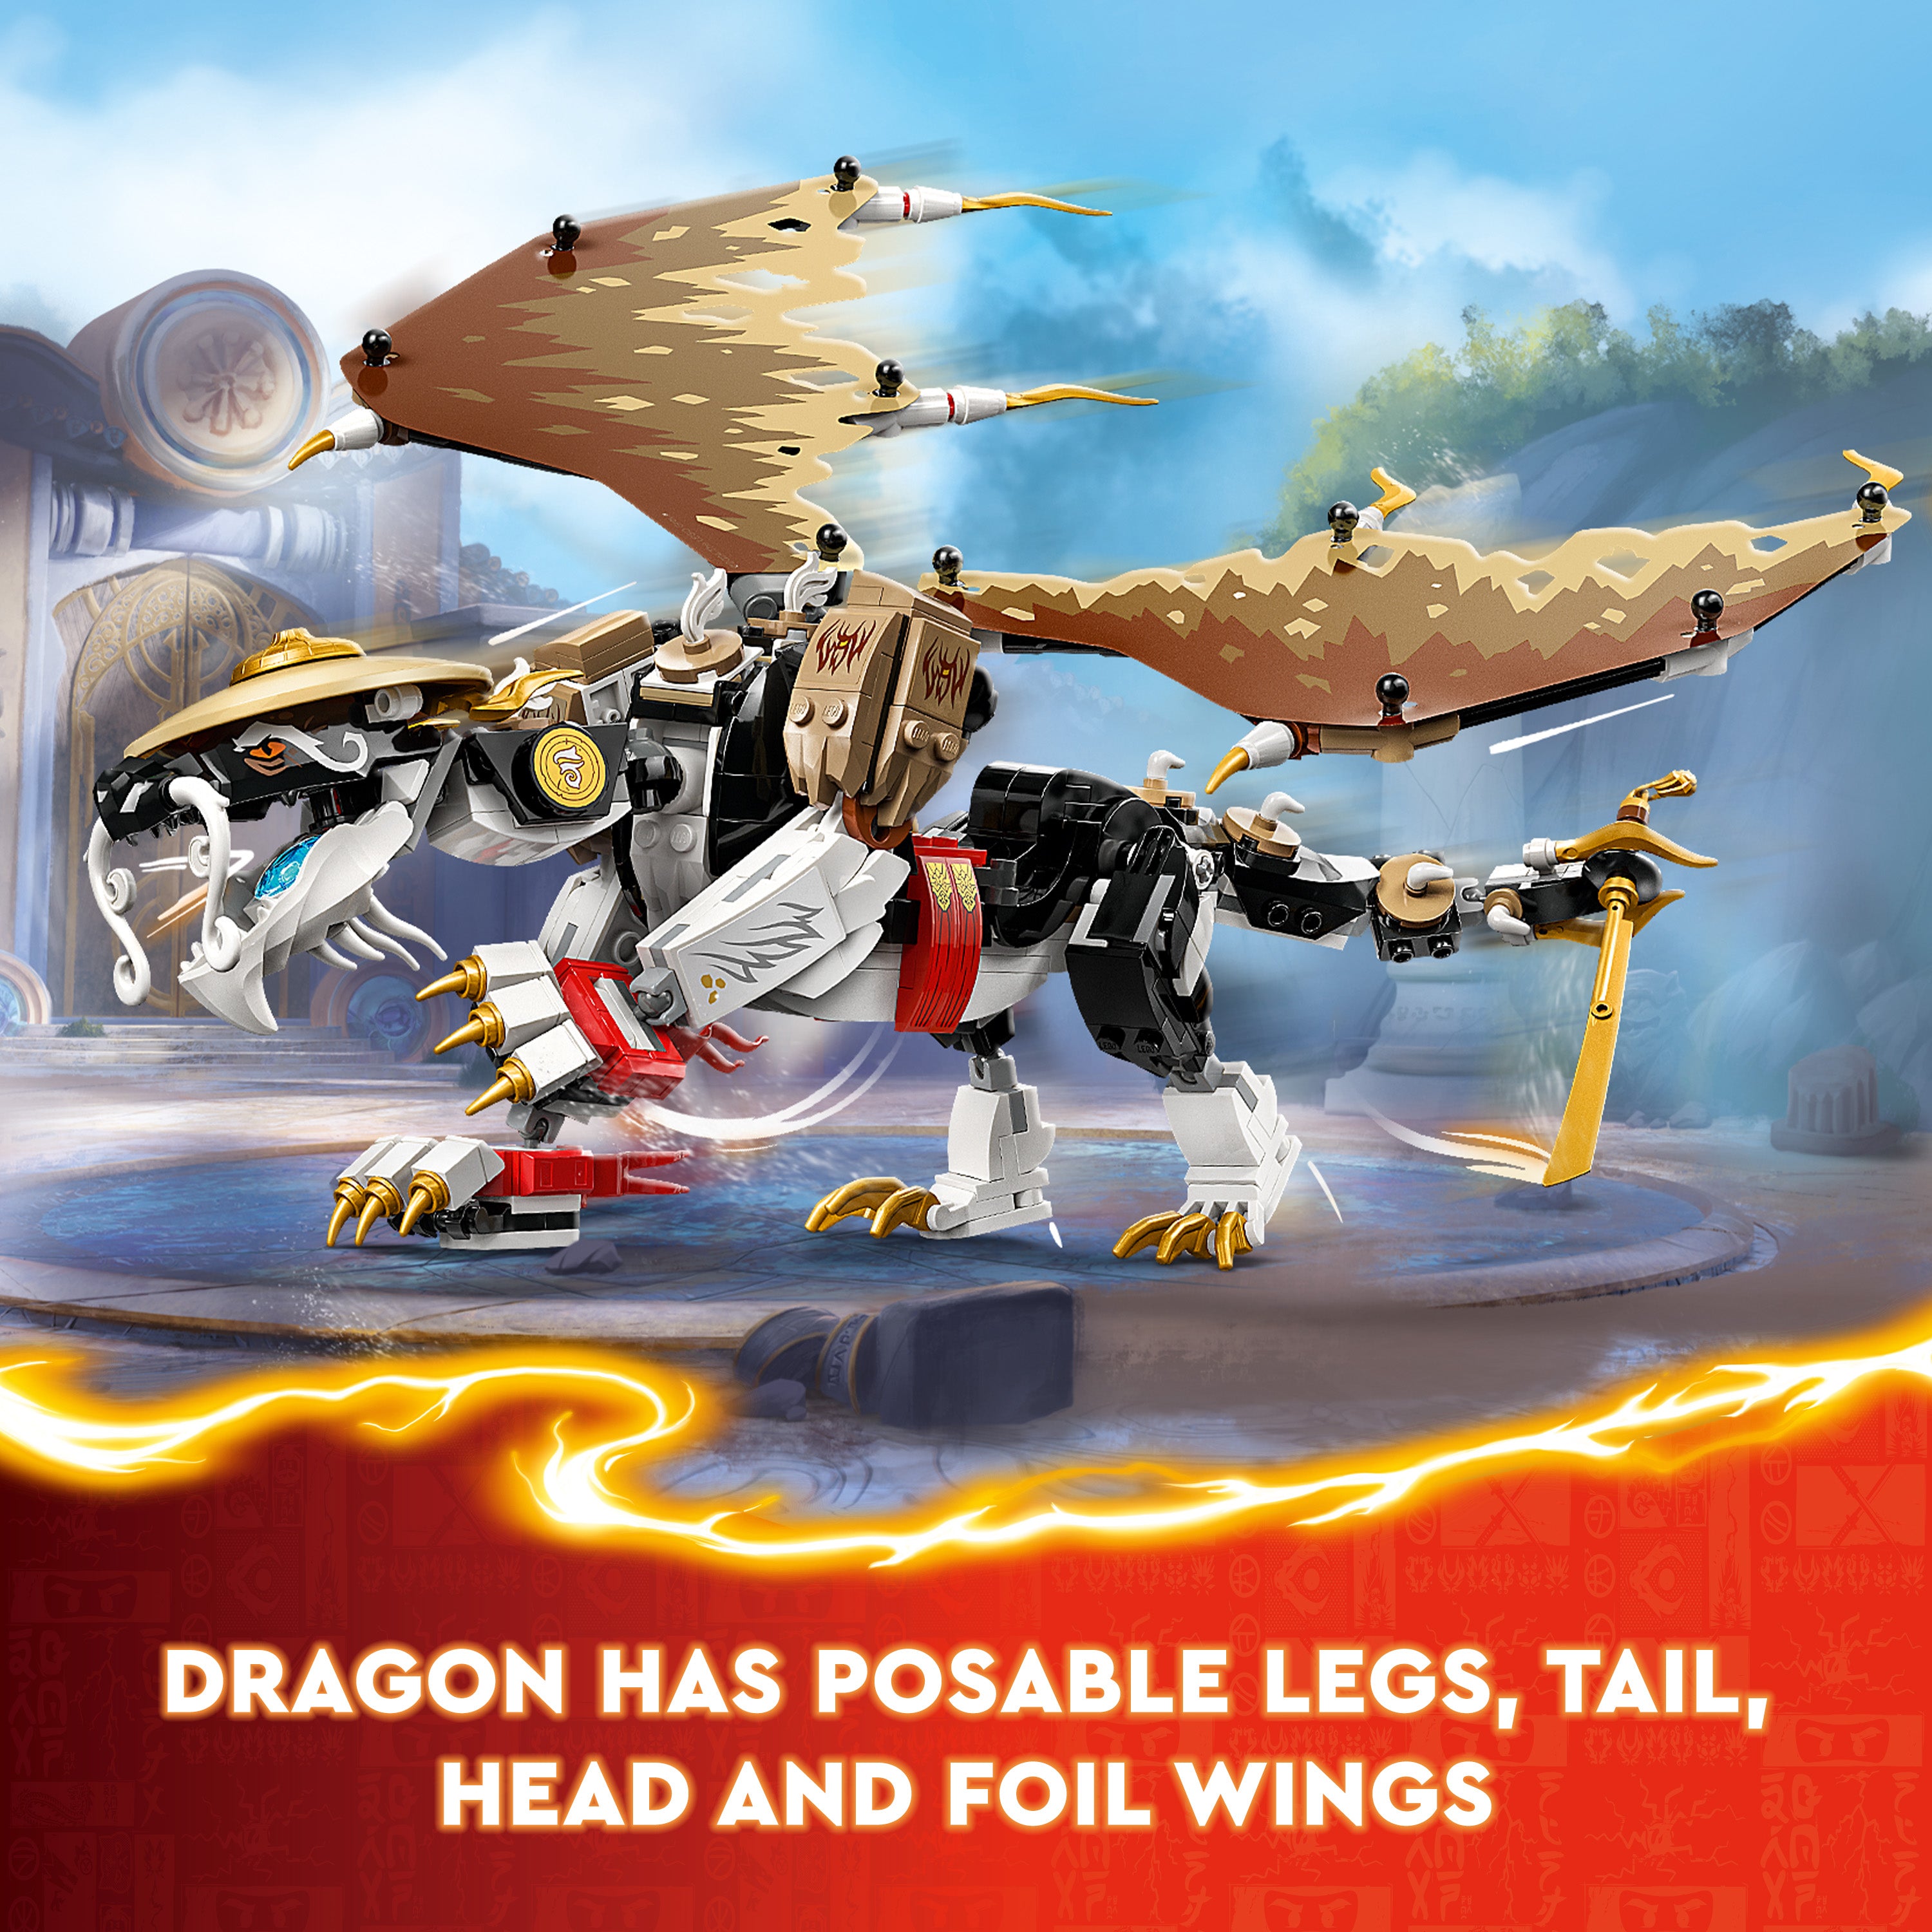 Lego 71809 Egalt the Master Dragon